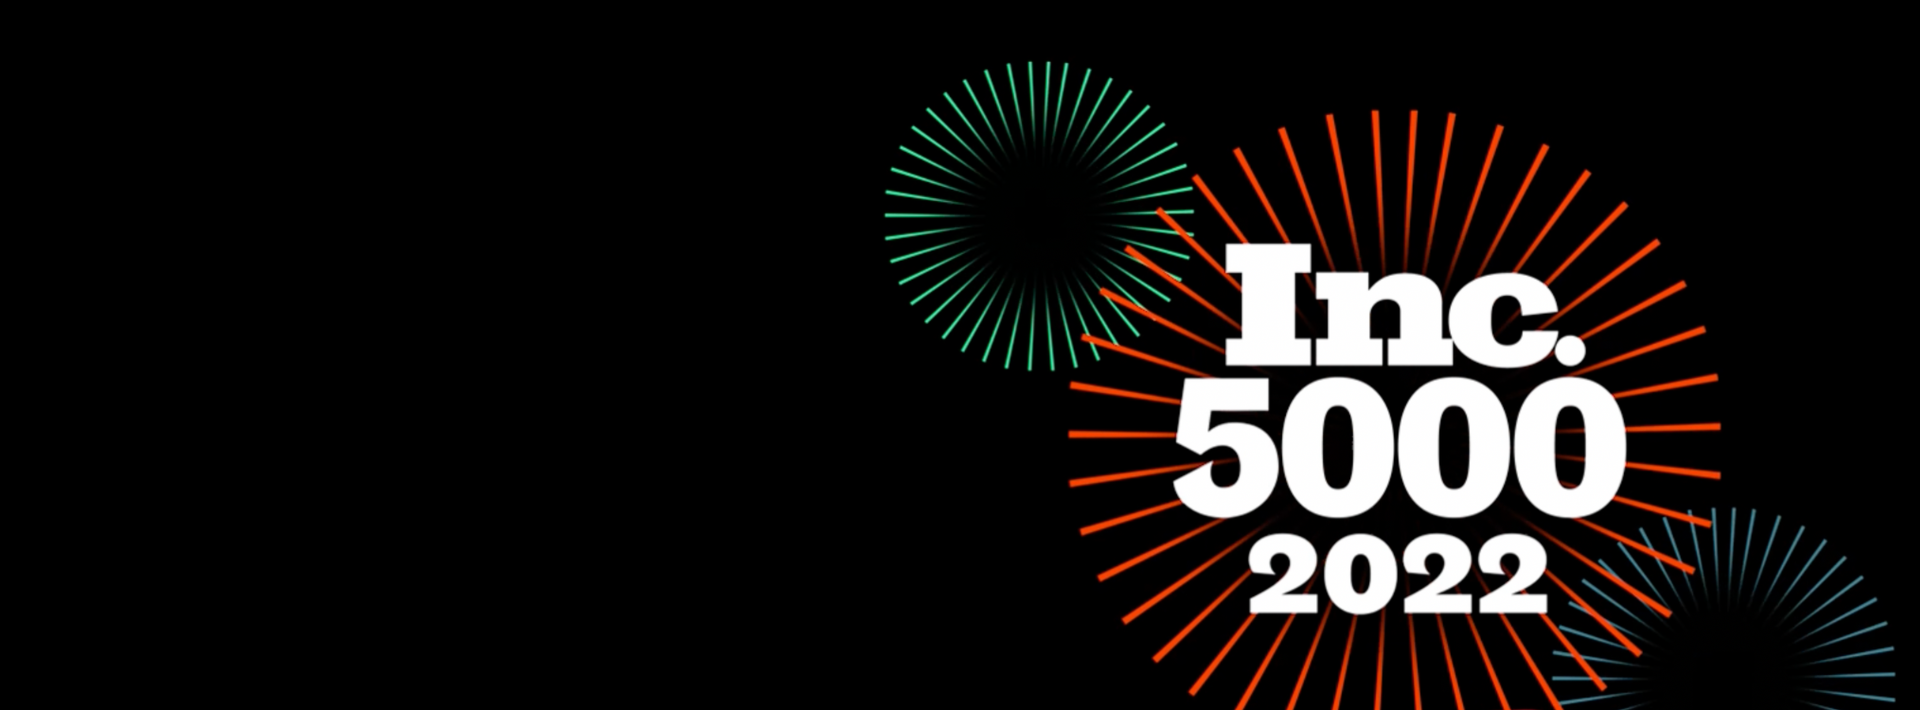 inc 5000 2022 logo